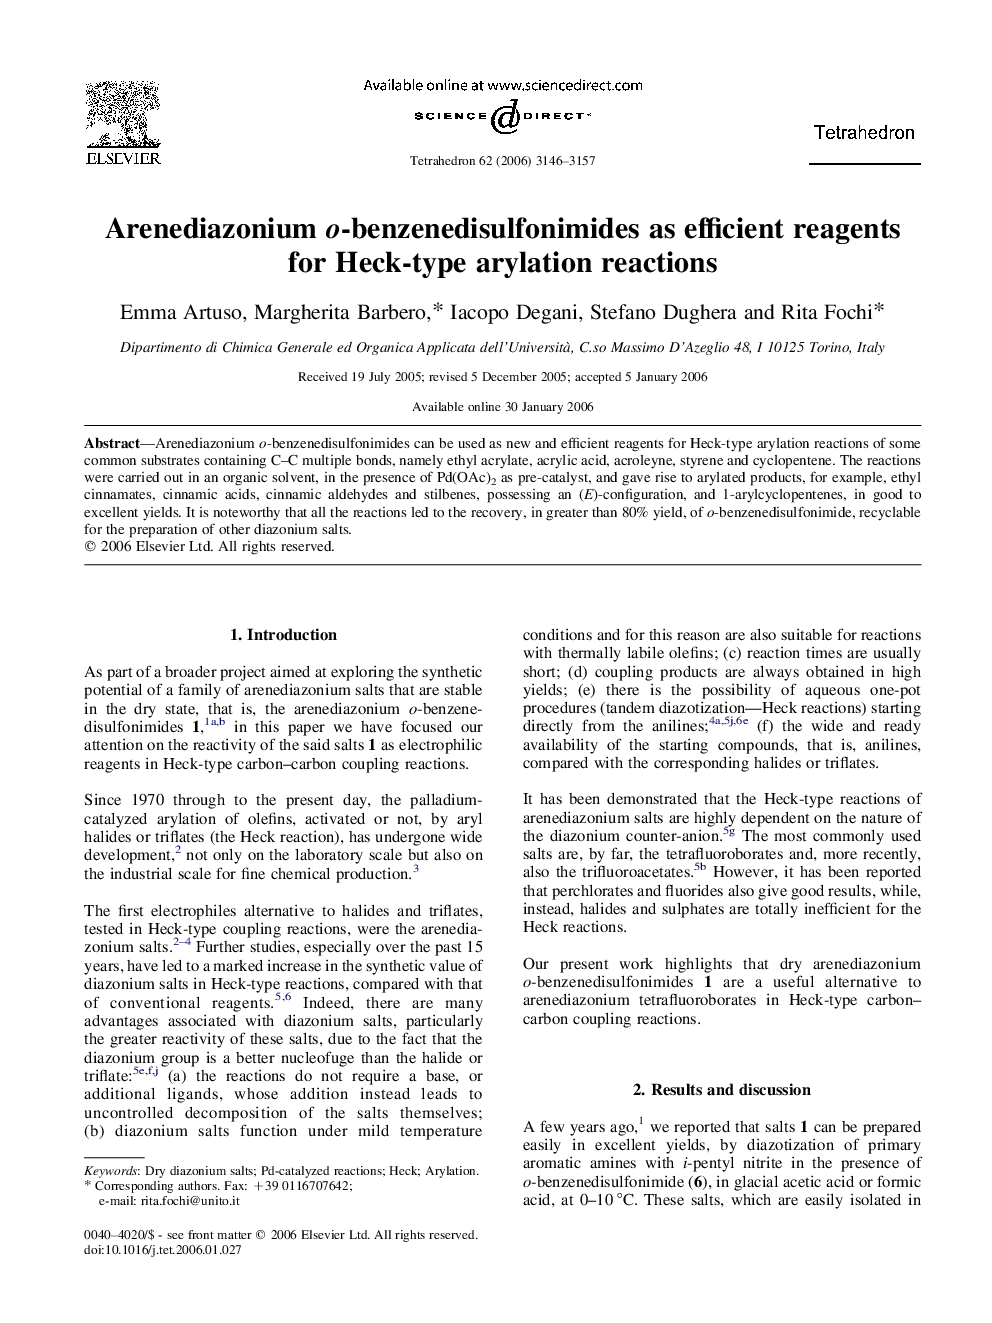 Arenediazonium o-benzenedisulfonimides as efficient reagents for Heck-type arylation reactions